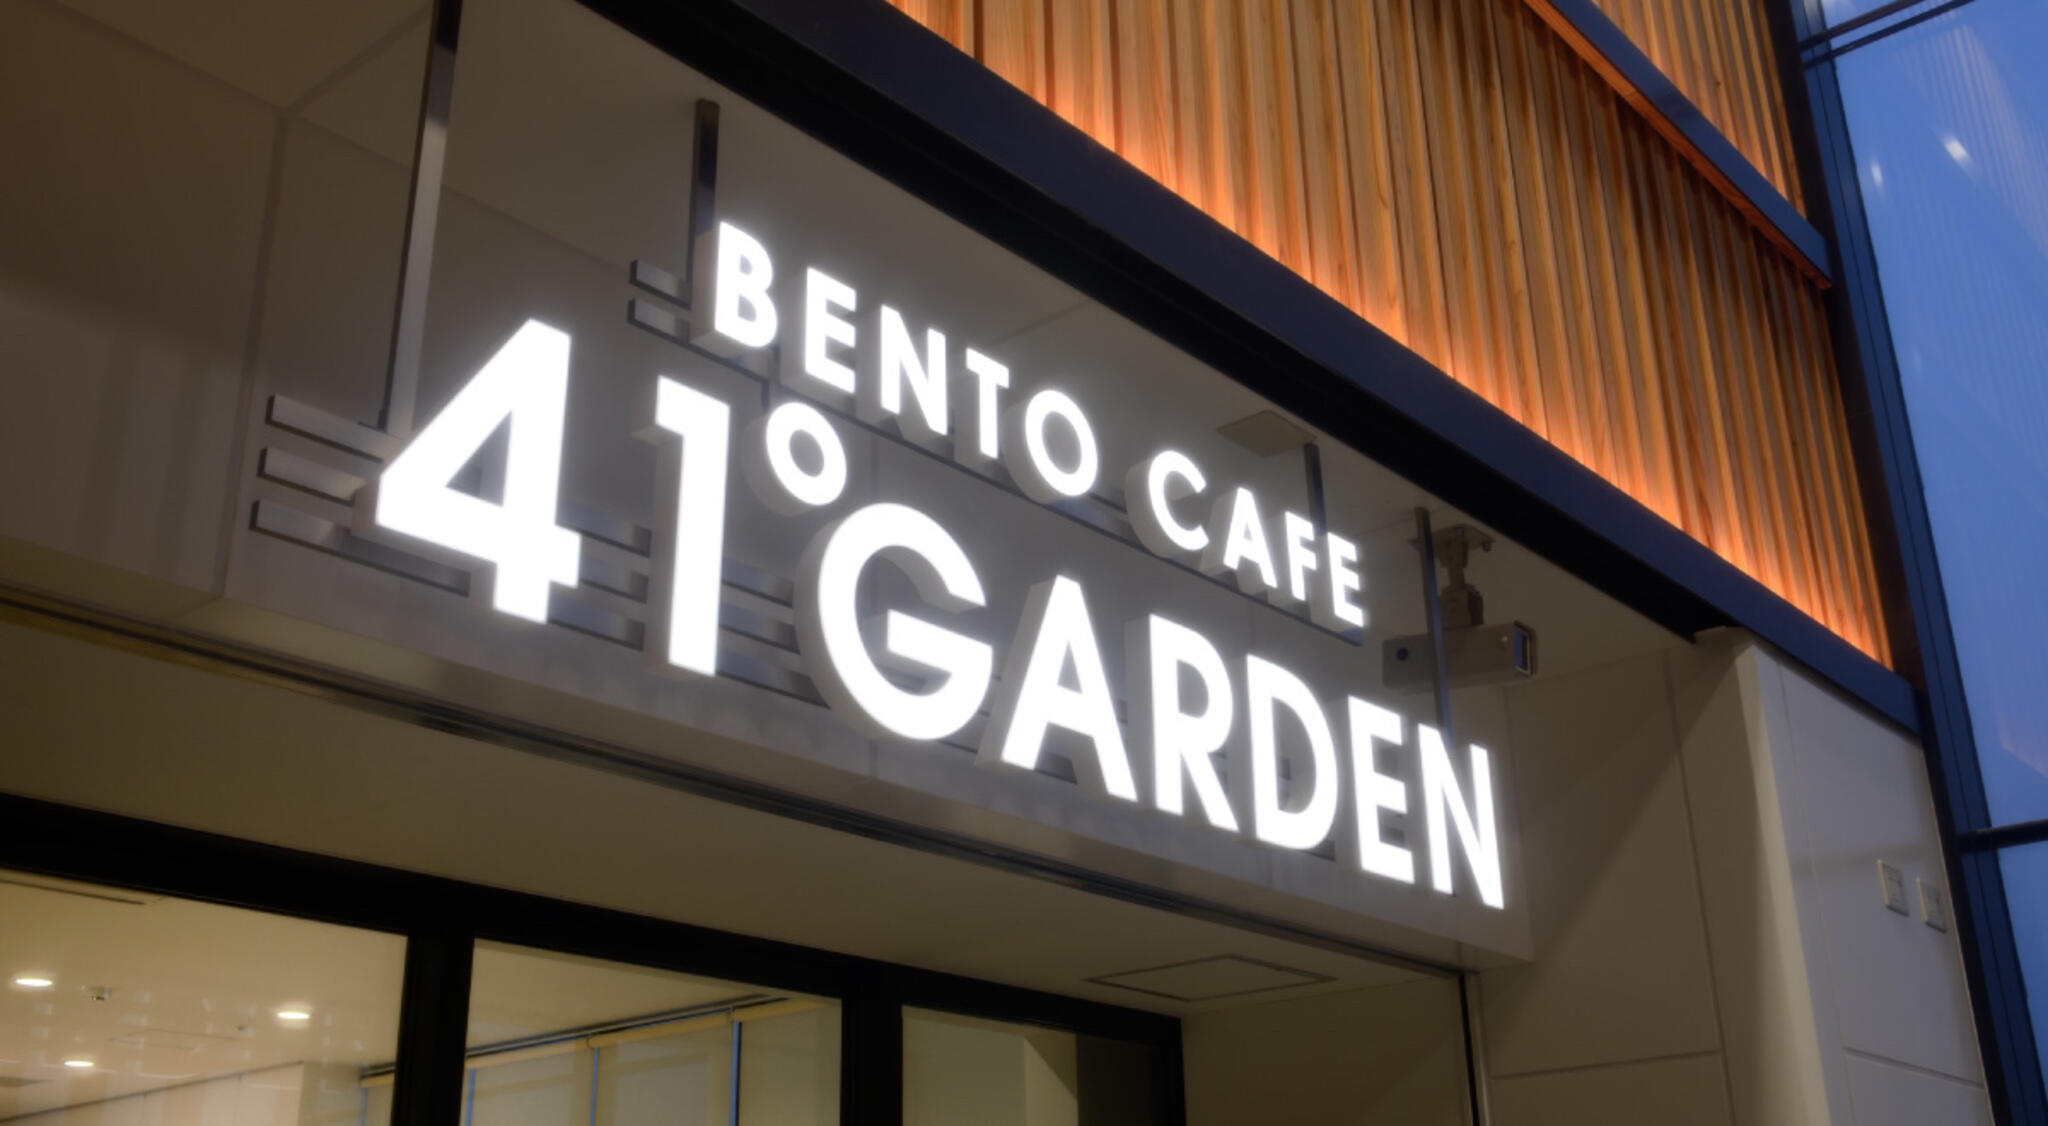 BENTO CAFE 41°GARDENの代表写真4